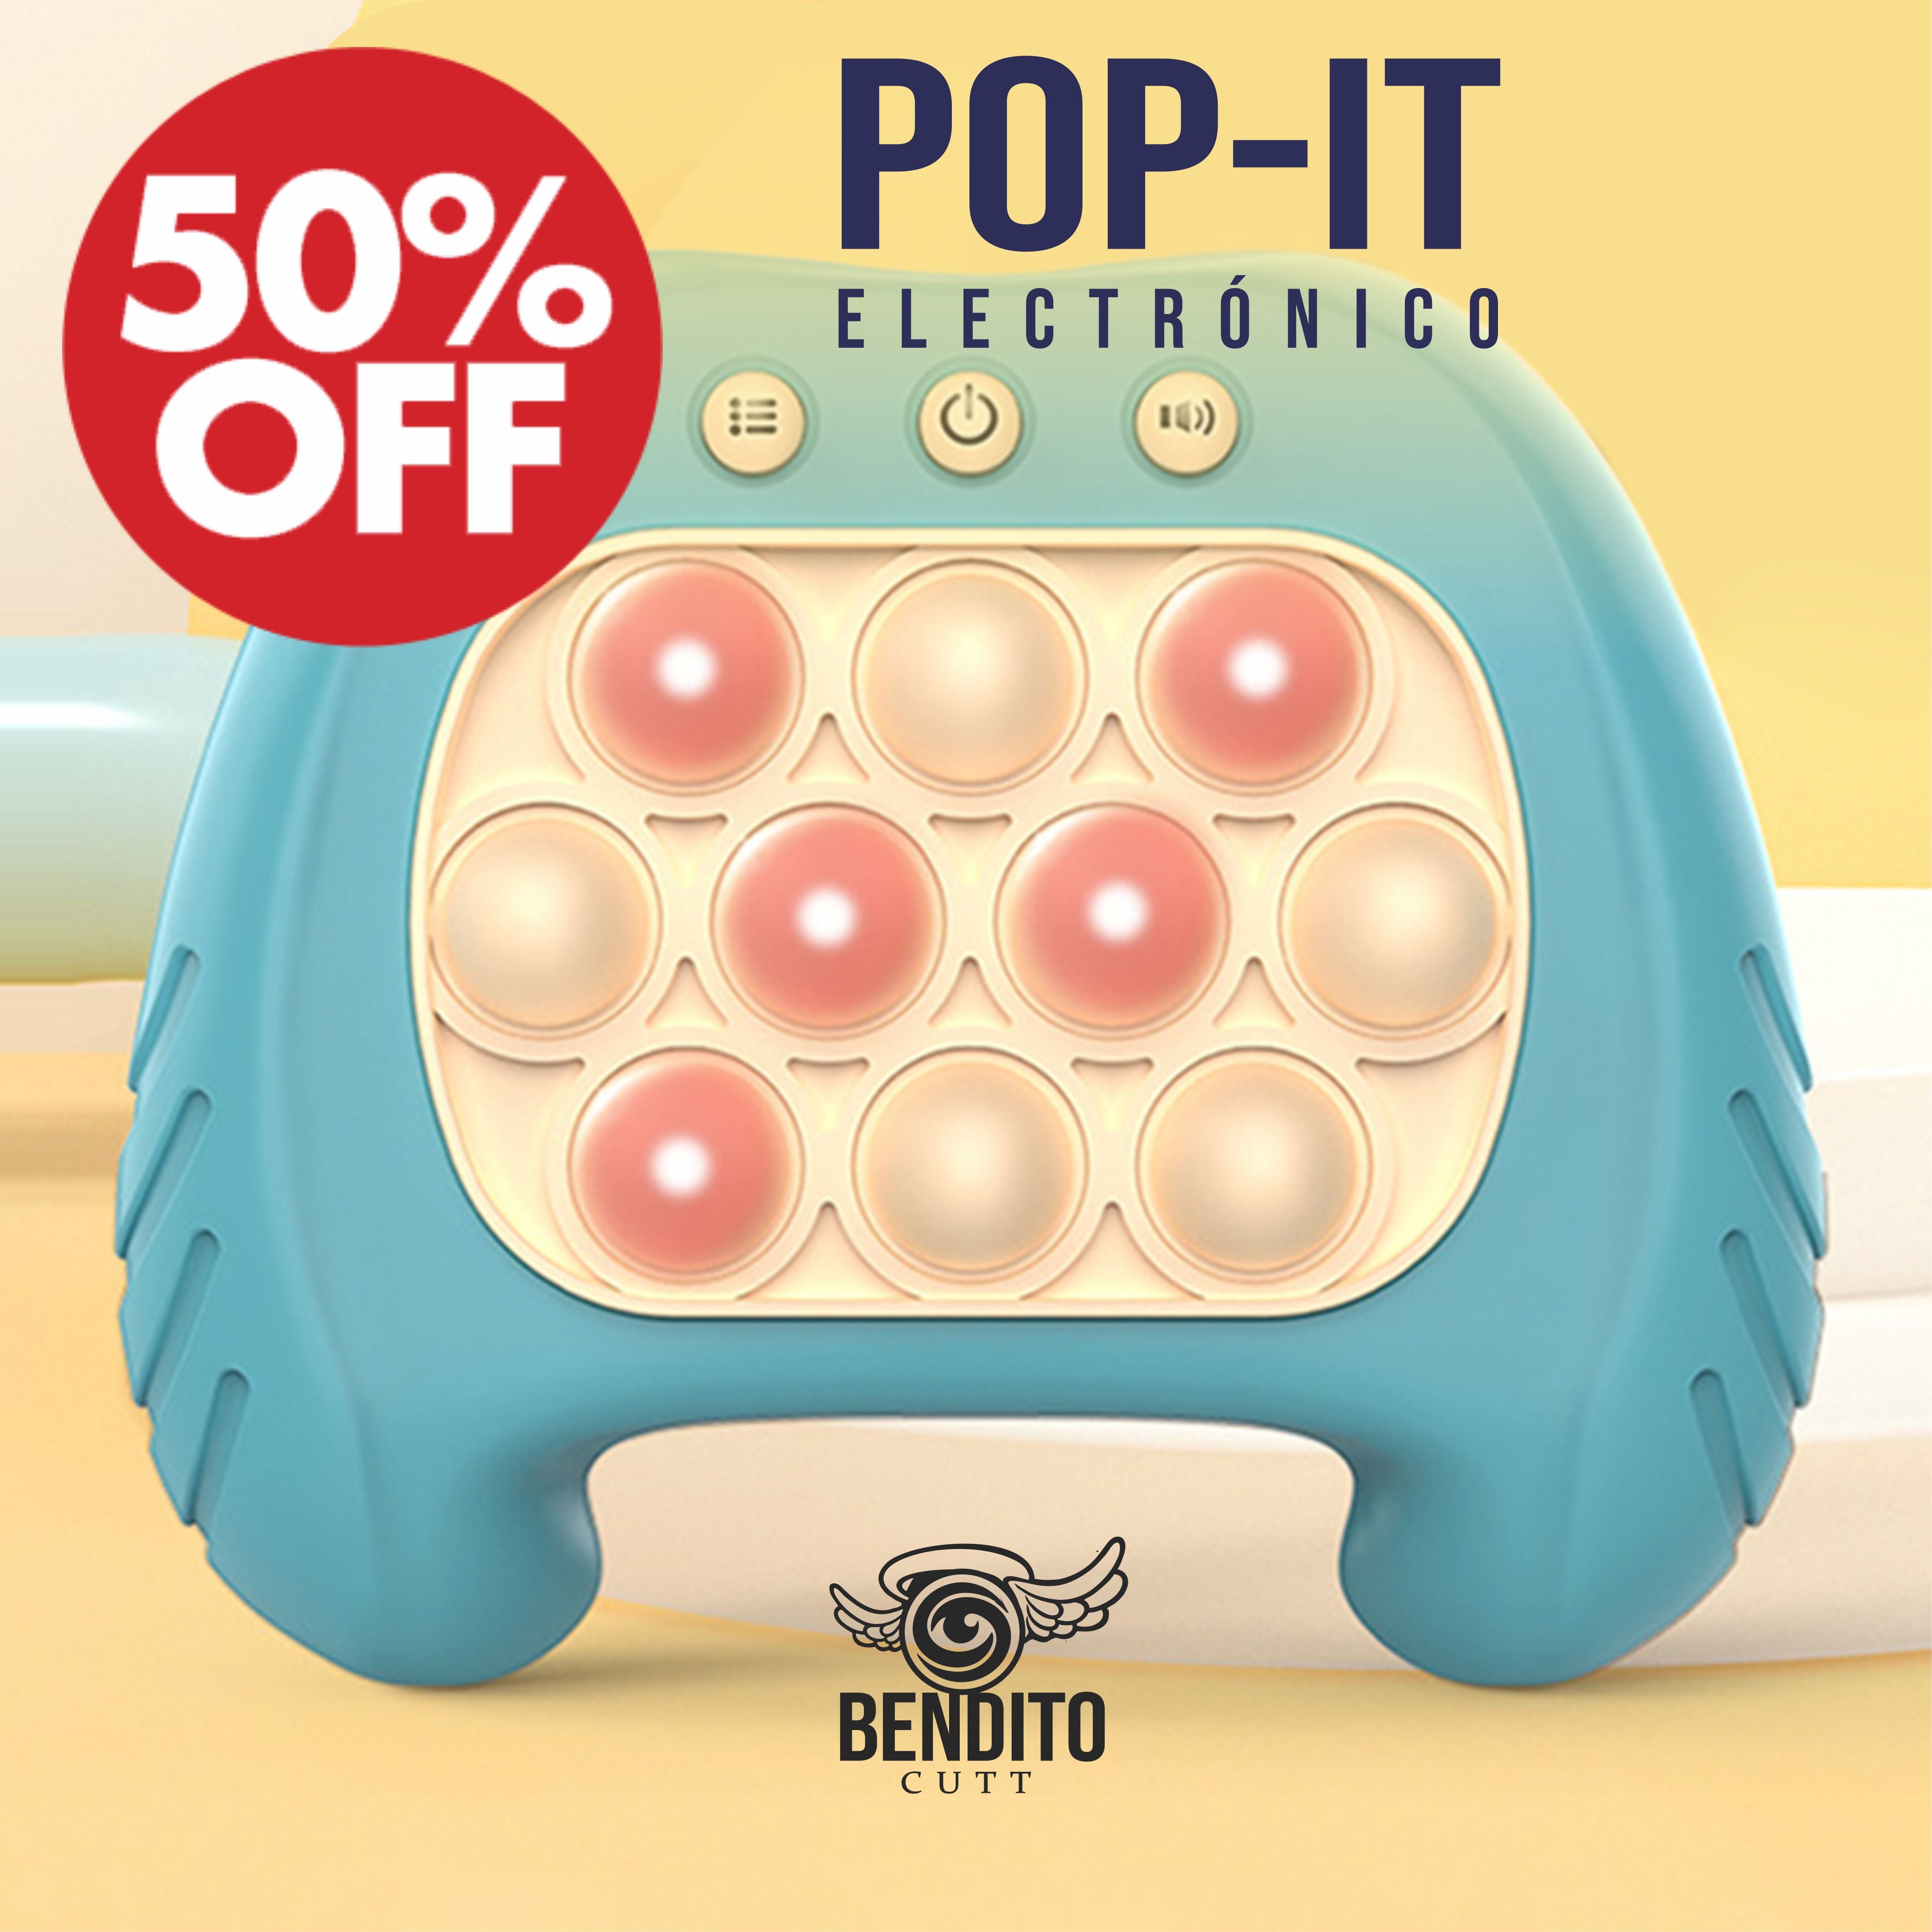 Pop-it juguete electronico ™ – BenditoCutt